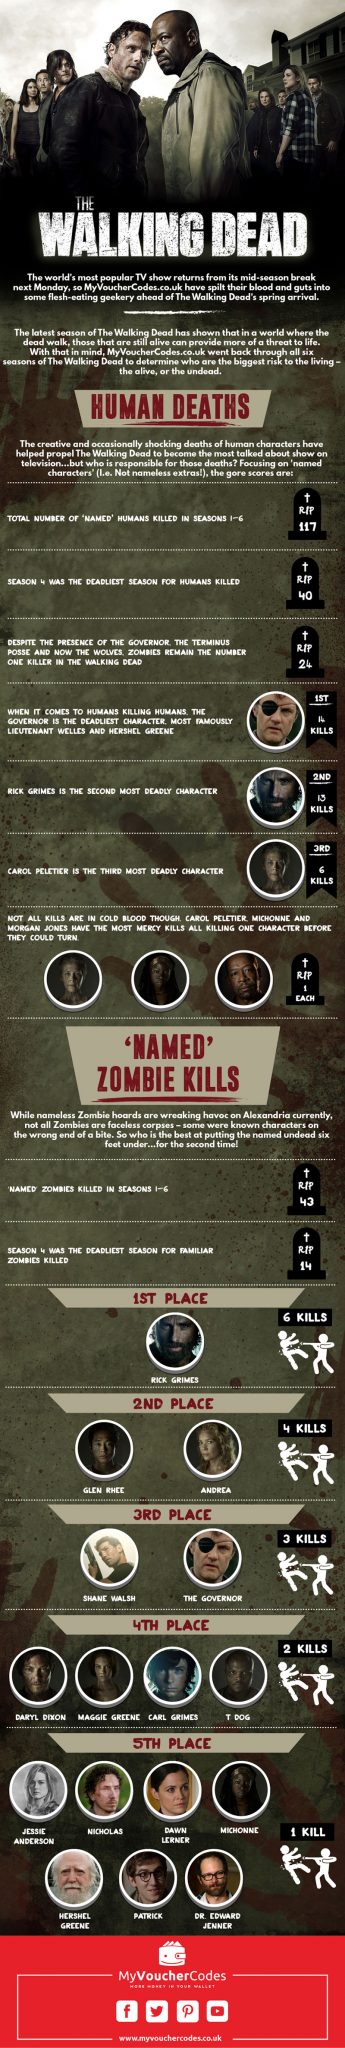 Walking-Dead-Infographic-01